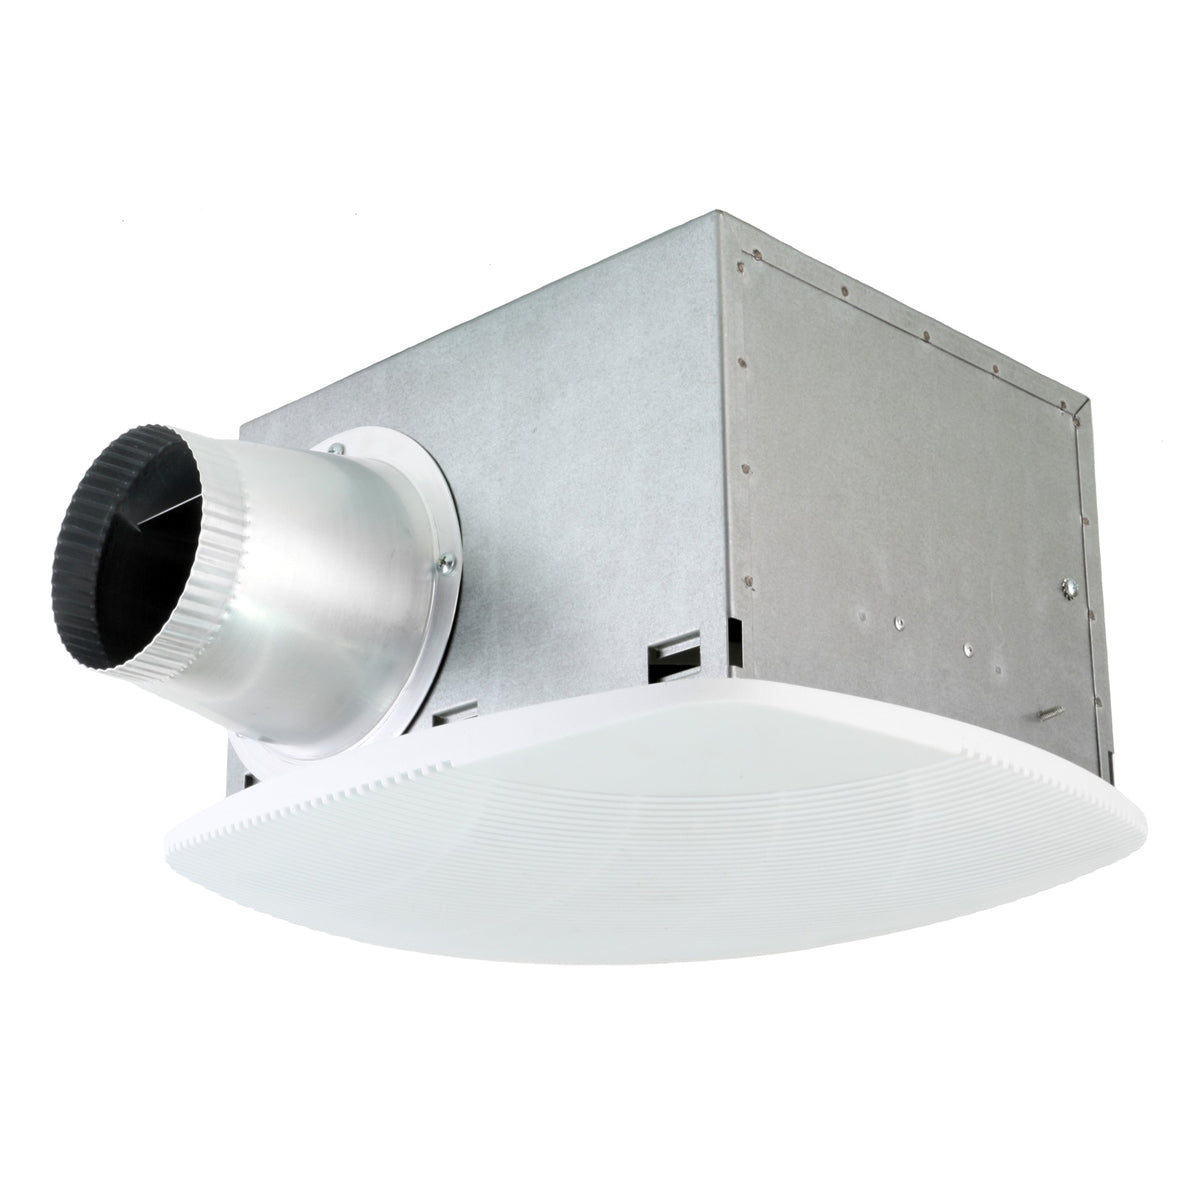 NuVent SH Series Standard Ceiling Exhaust Bath Fans